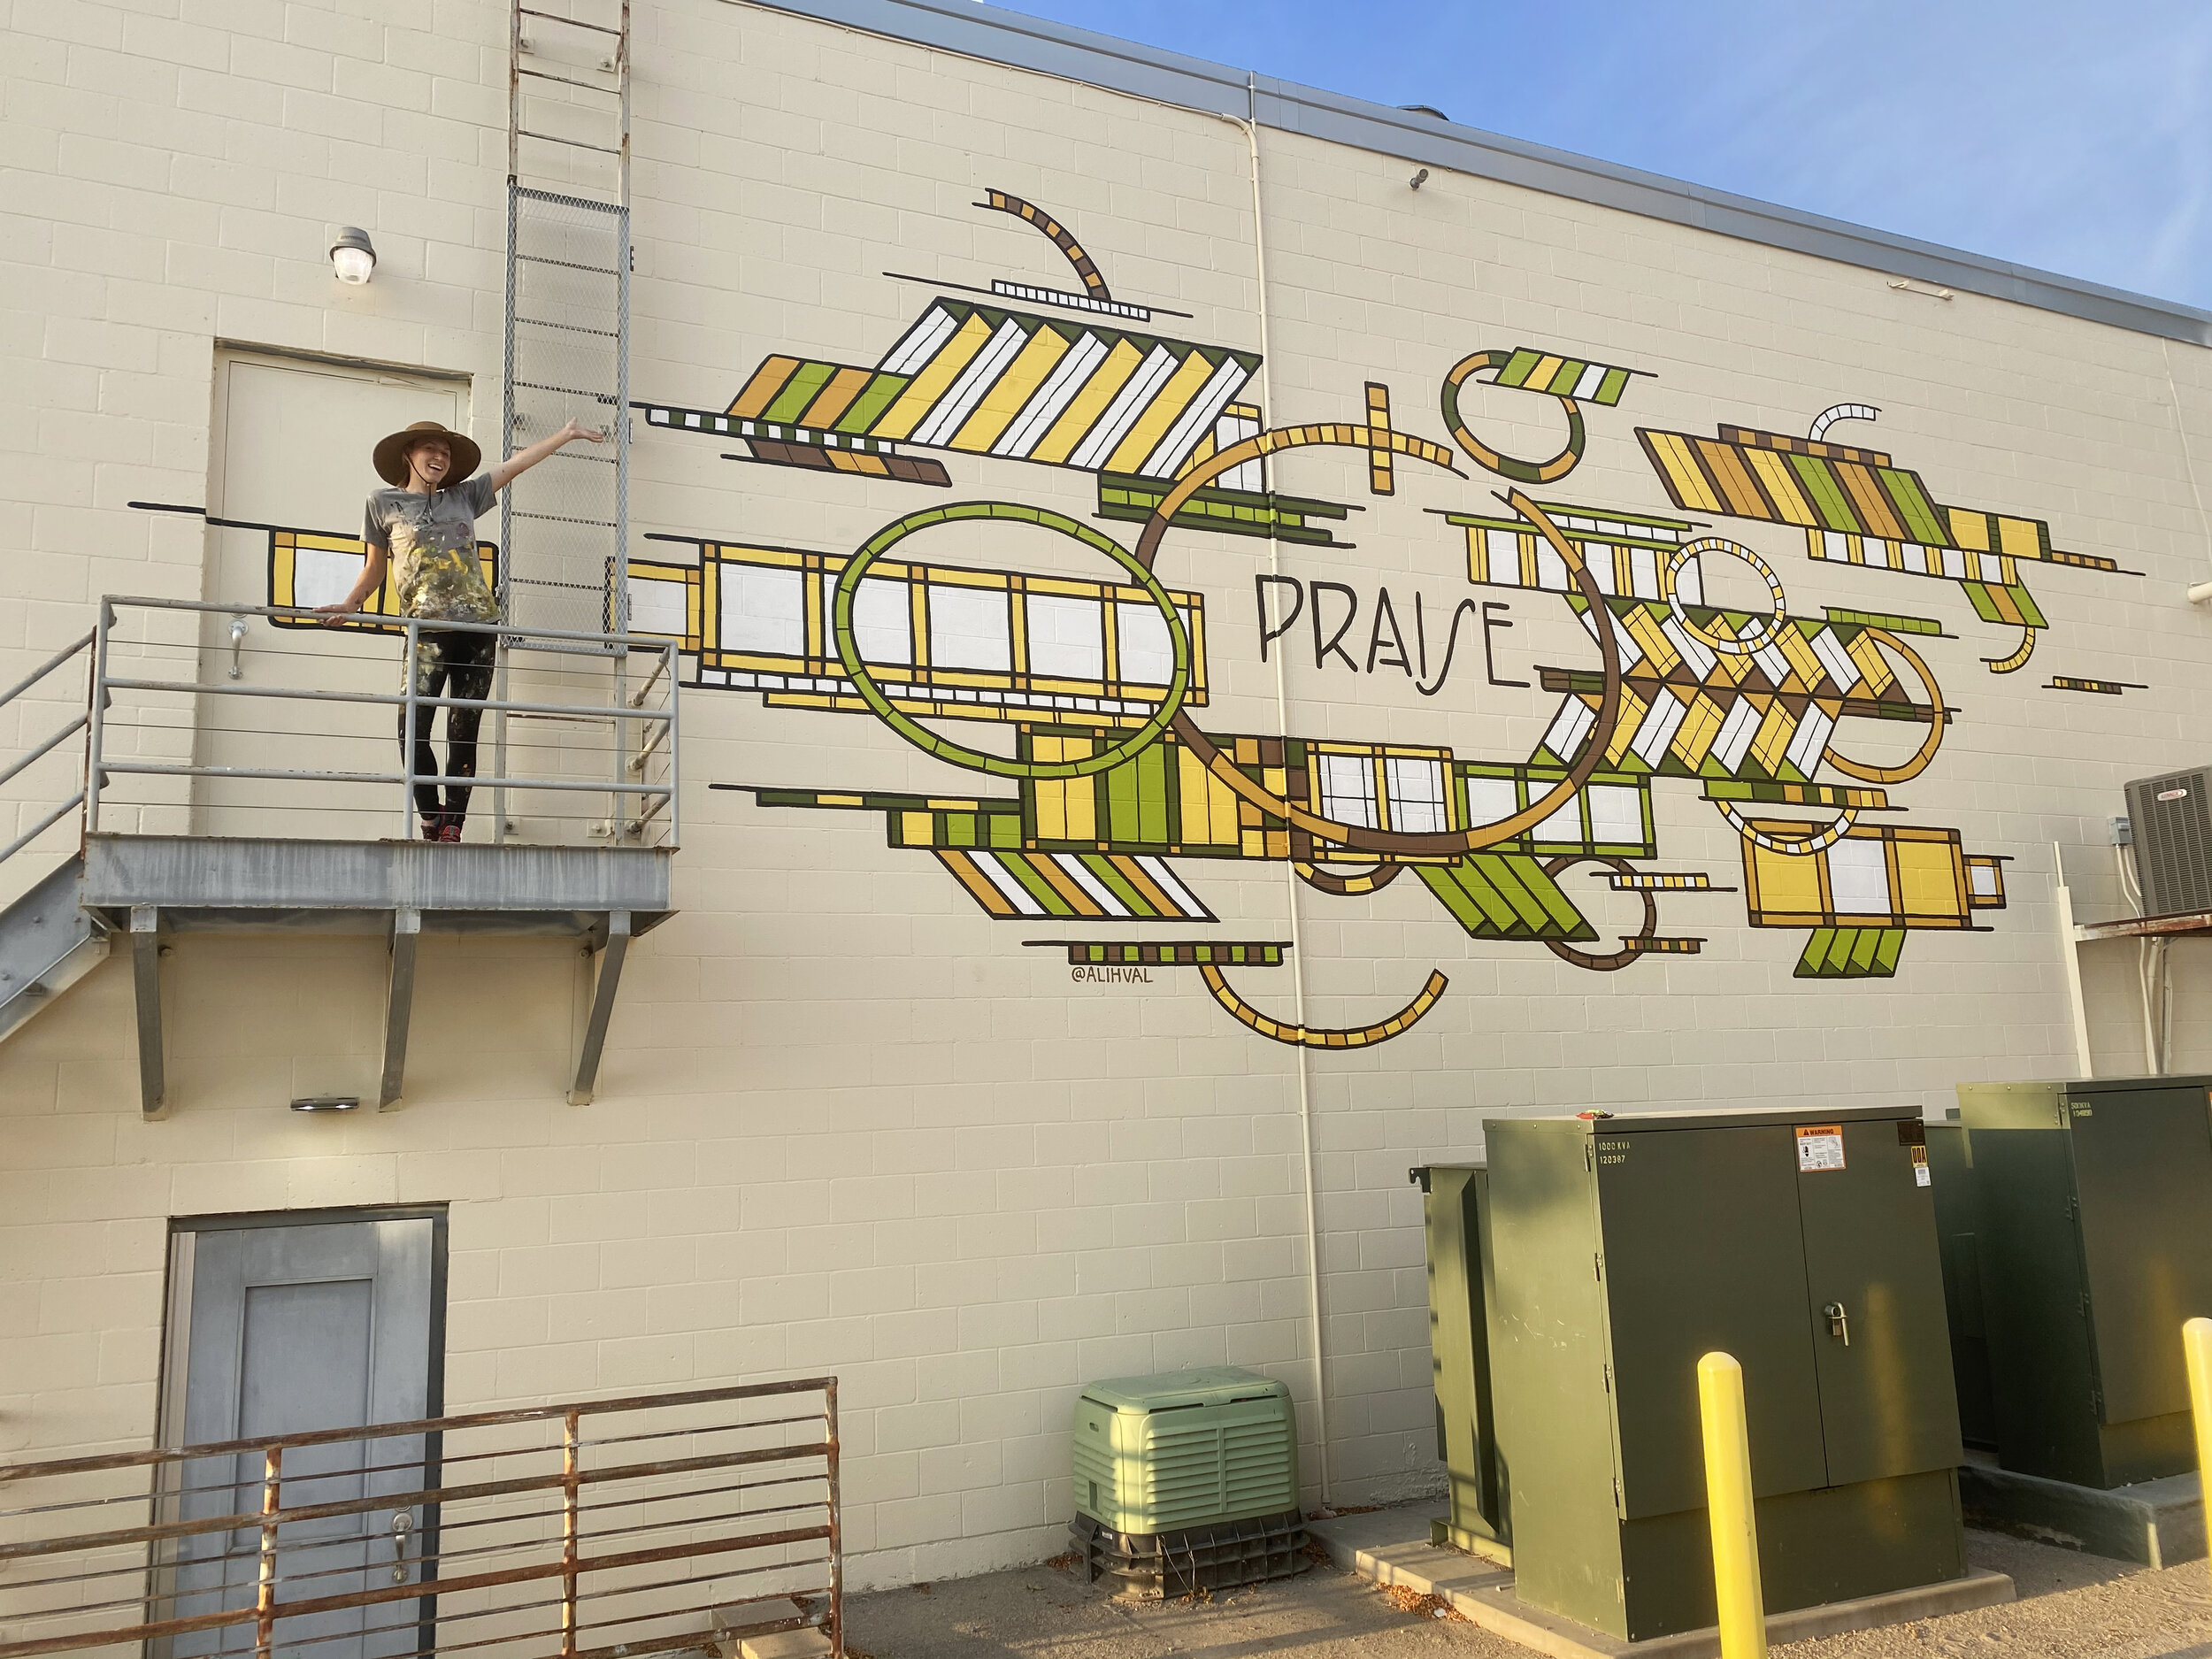   Praise Community Church Mural , 2020. Mason City, IA. Approx. 50’x15’ 